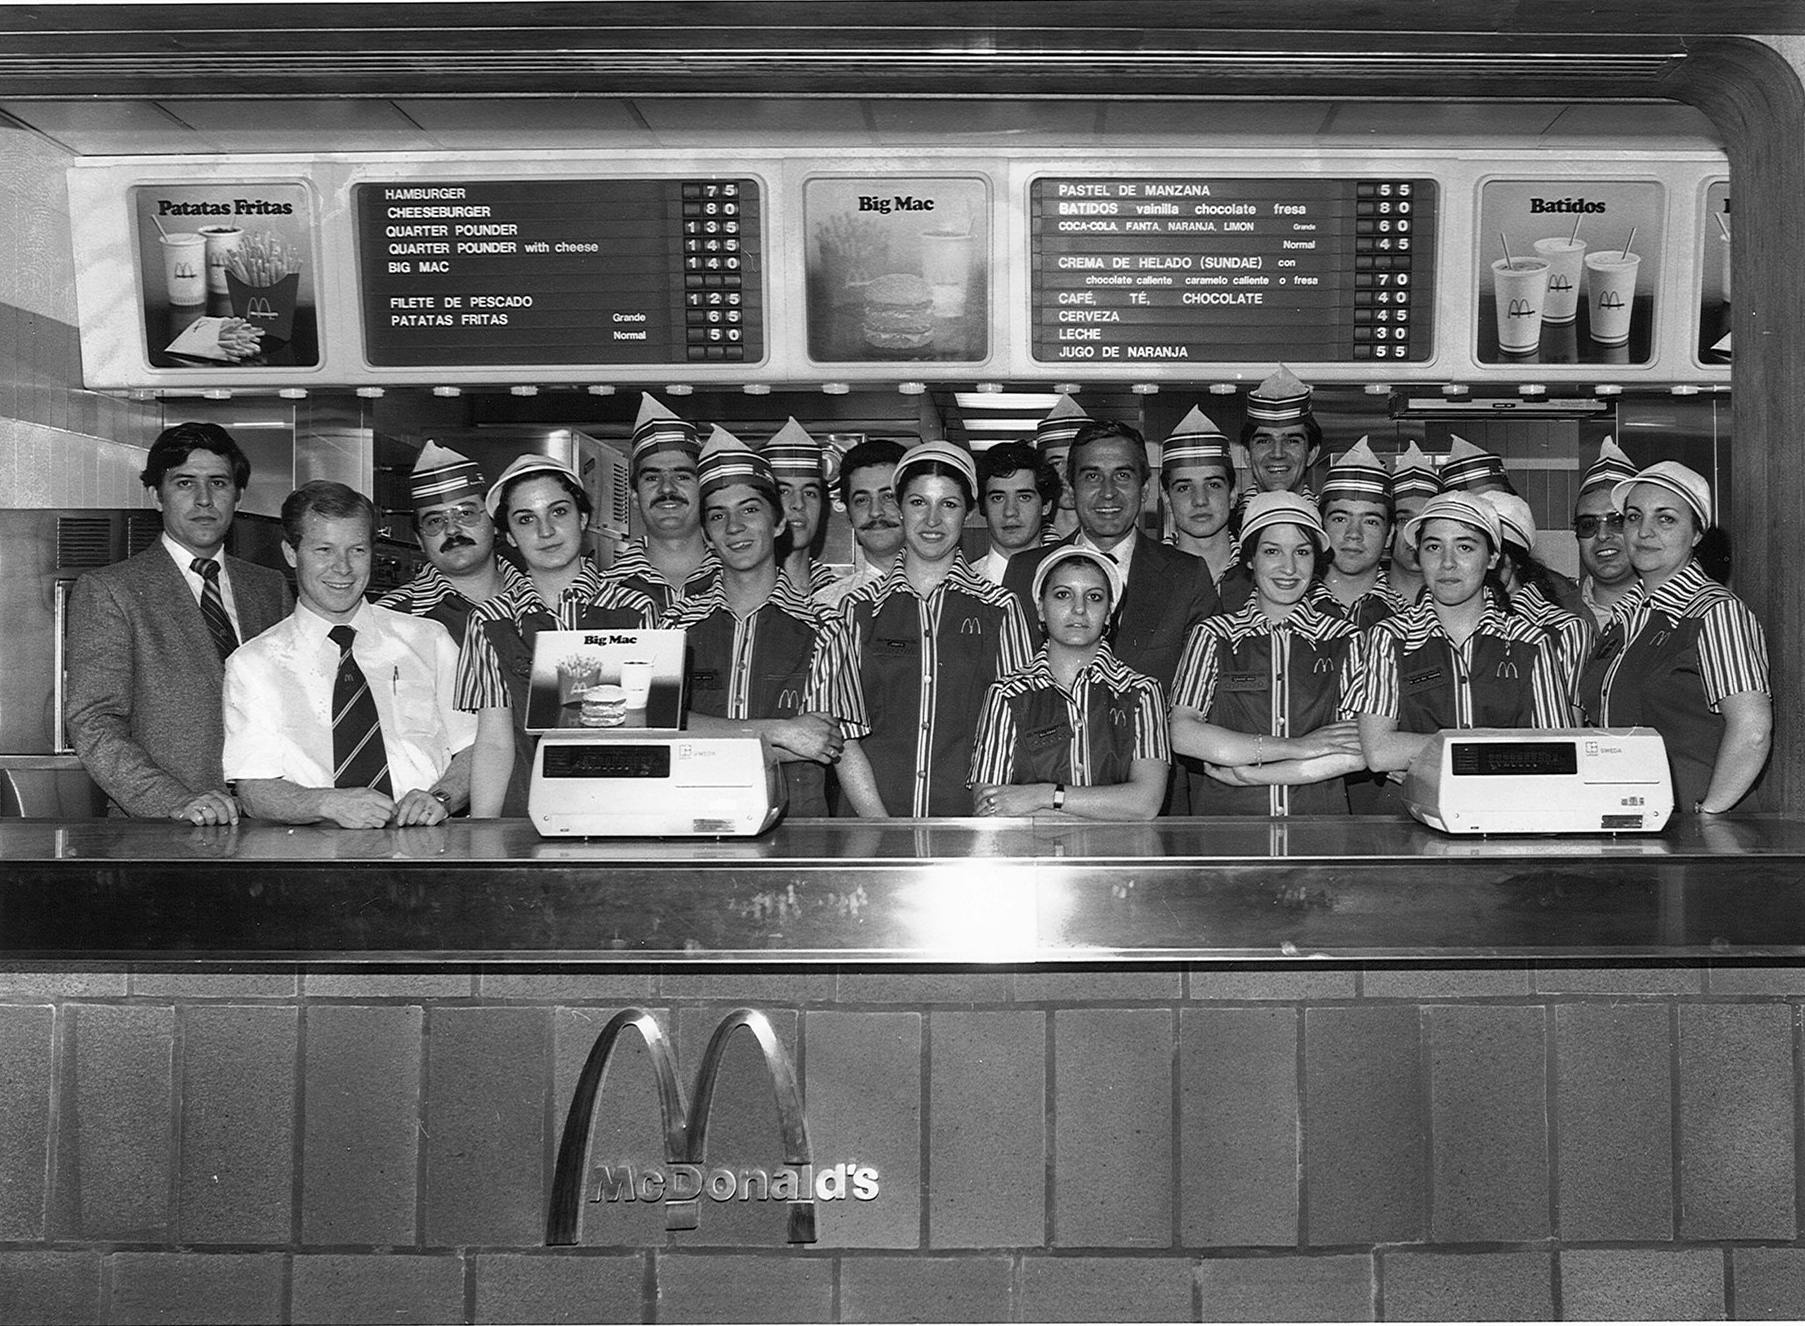 McDonald's Vintage